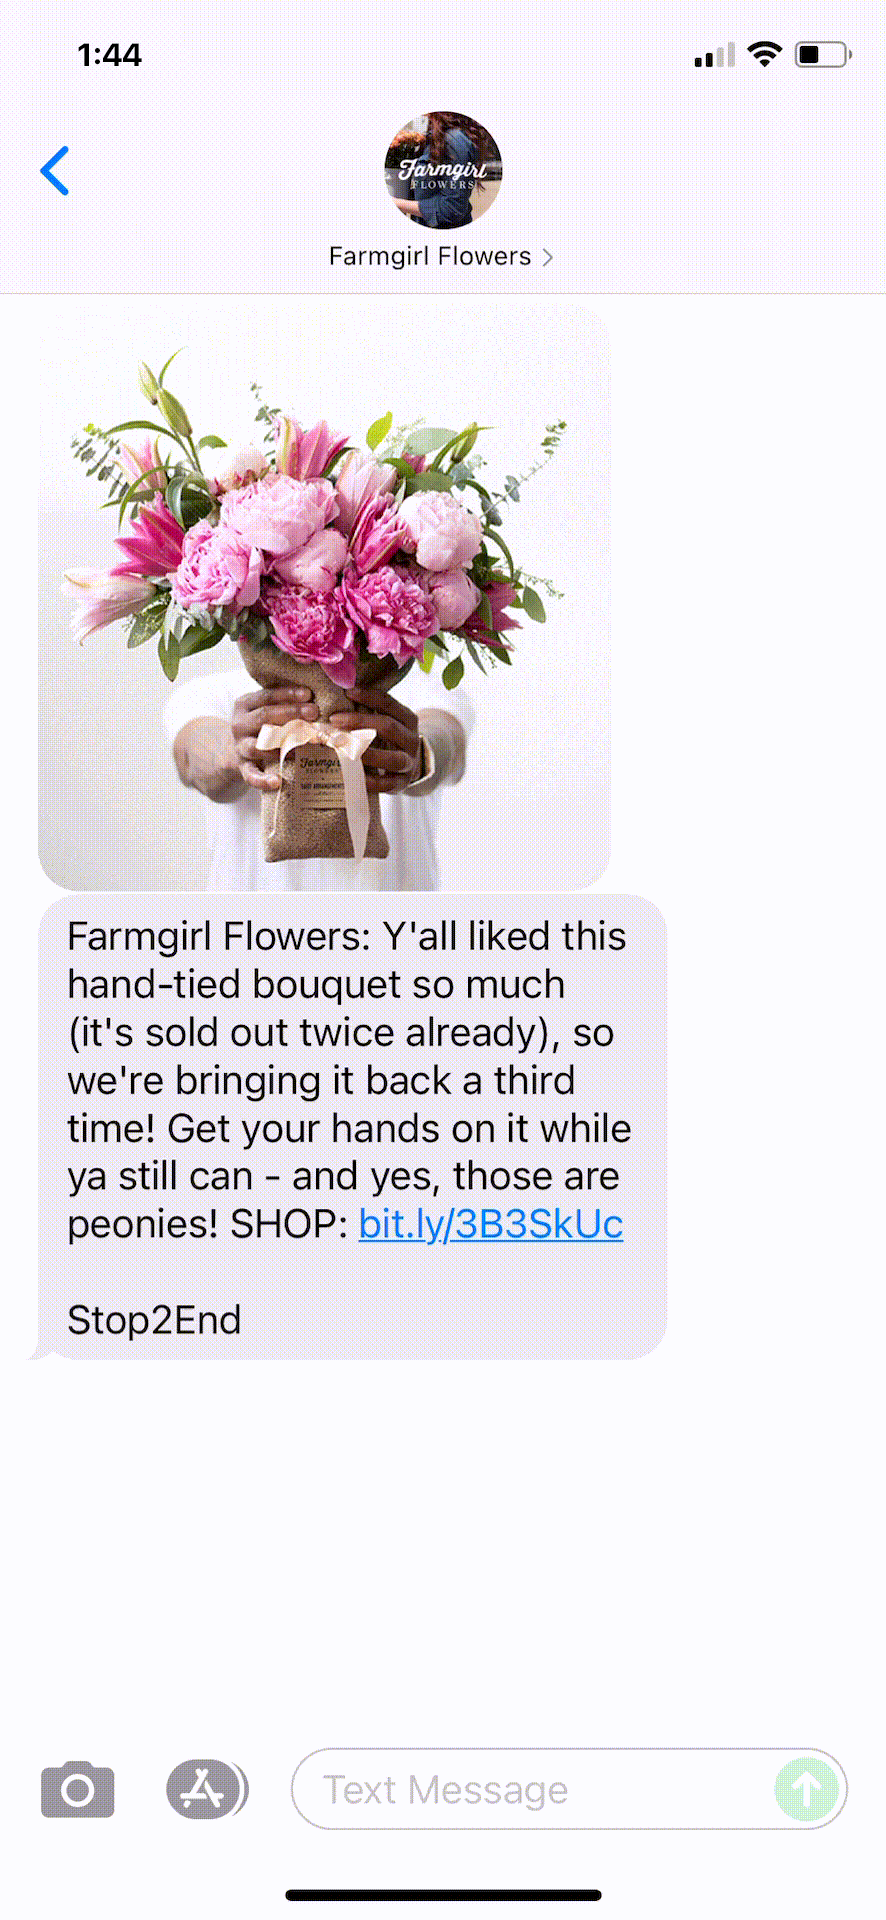 Farmgirl-Flowers-Text-Message-Marketing-Example-07.14.2021